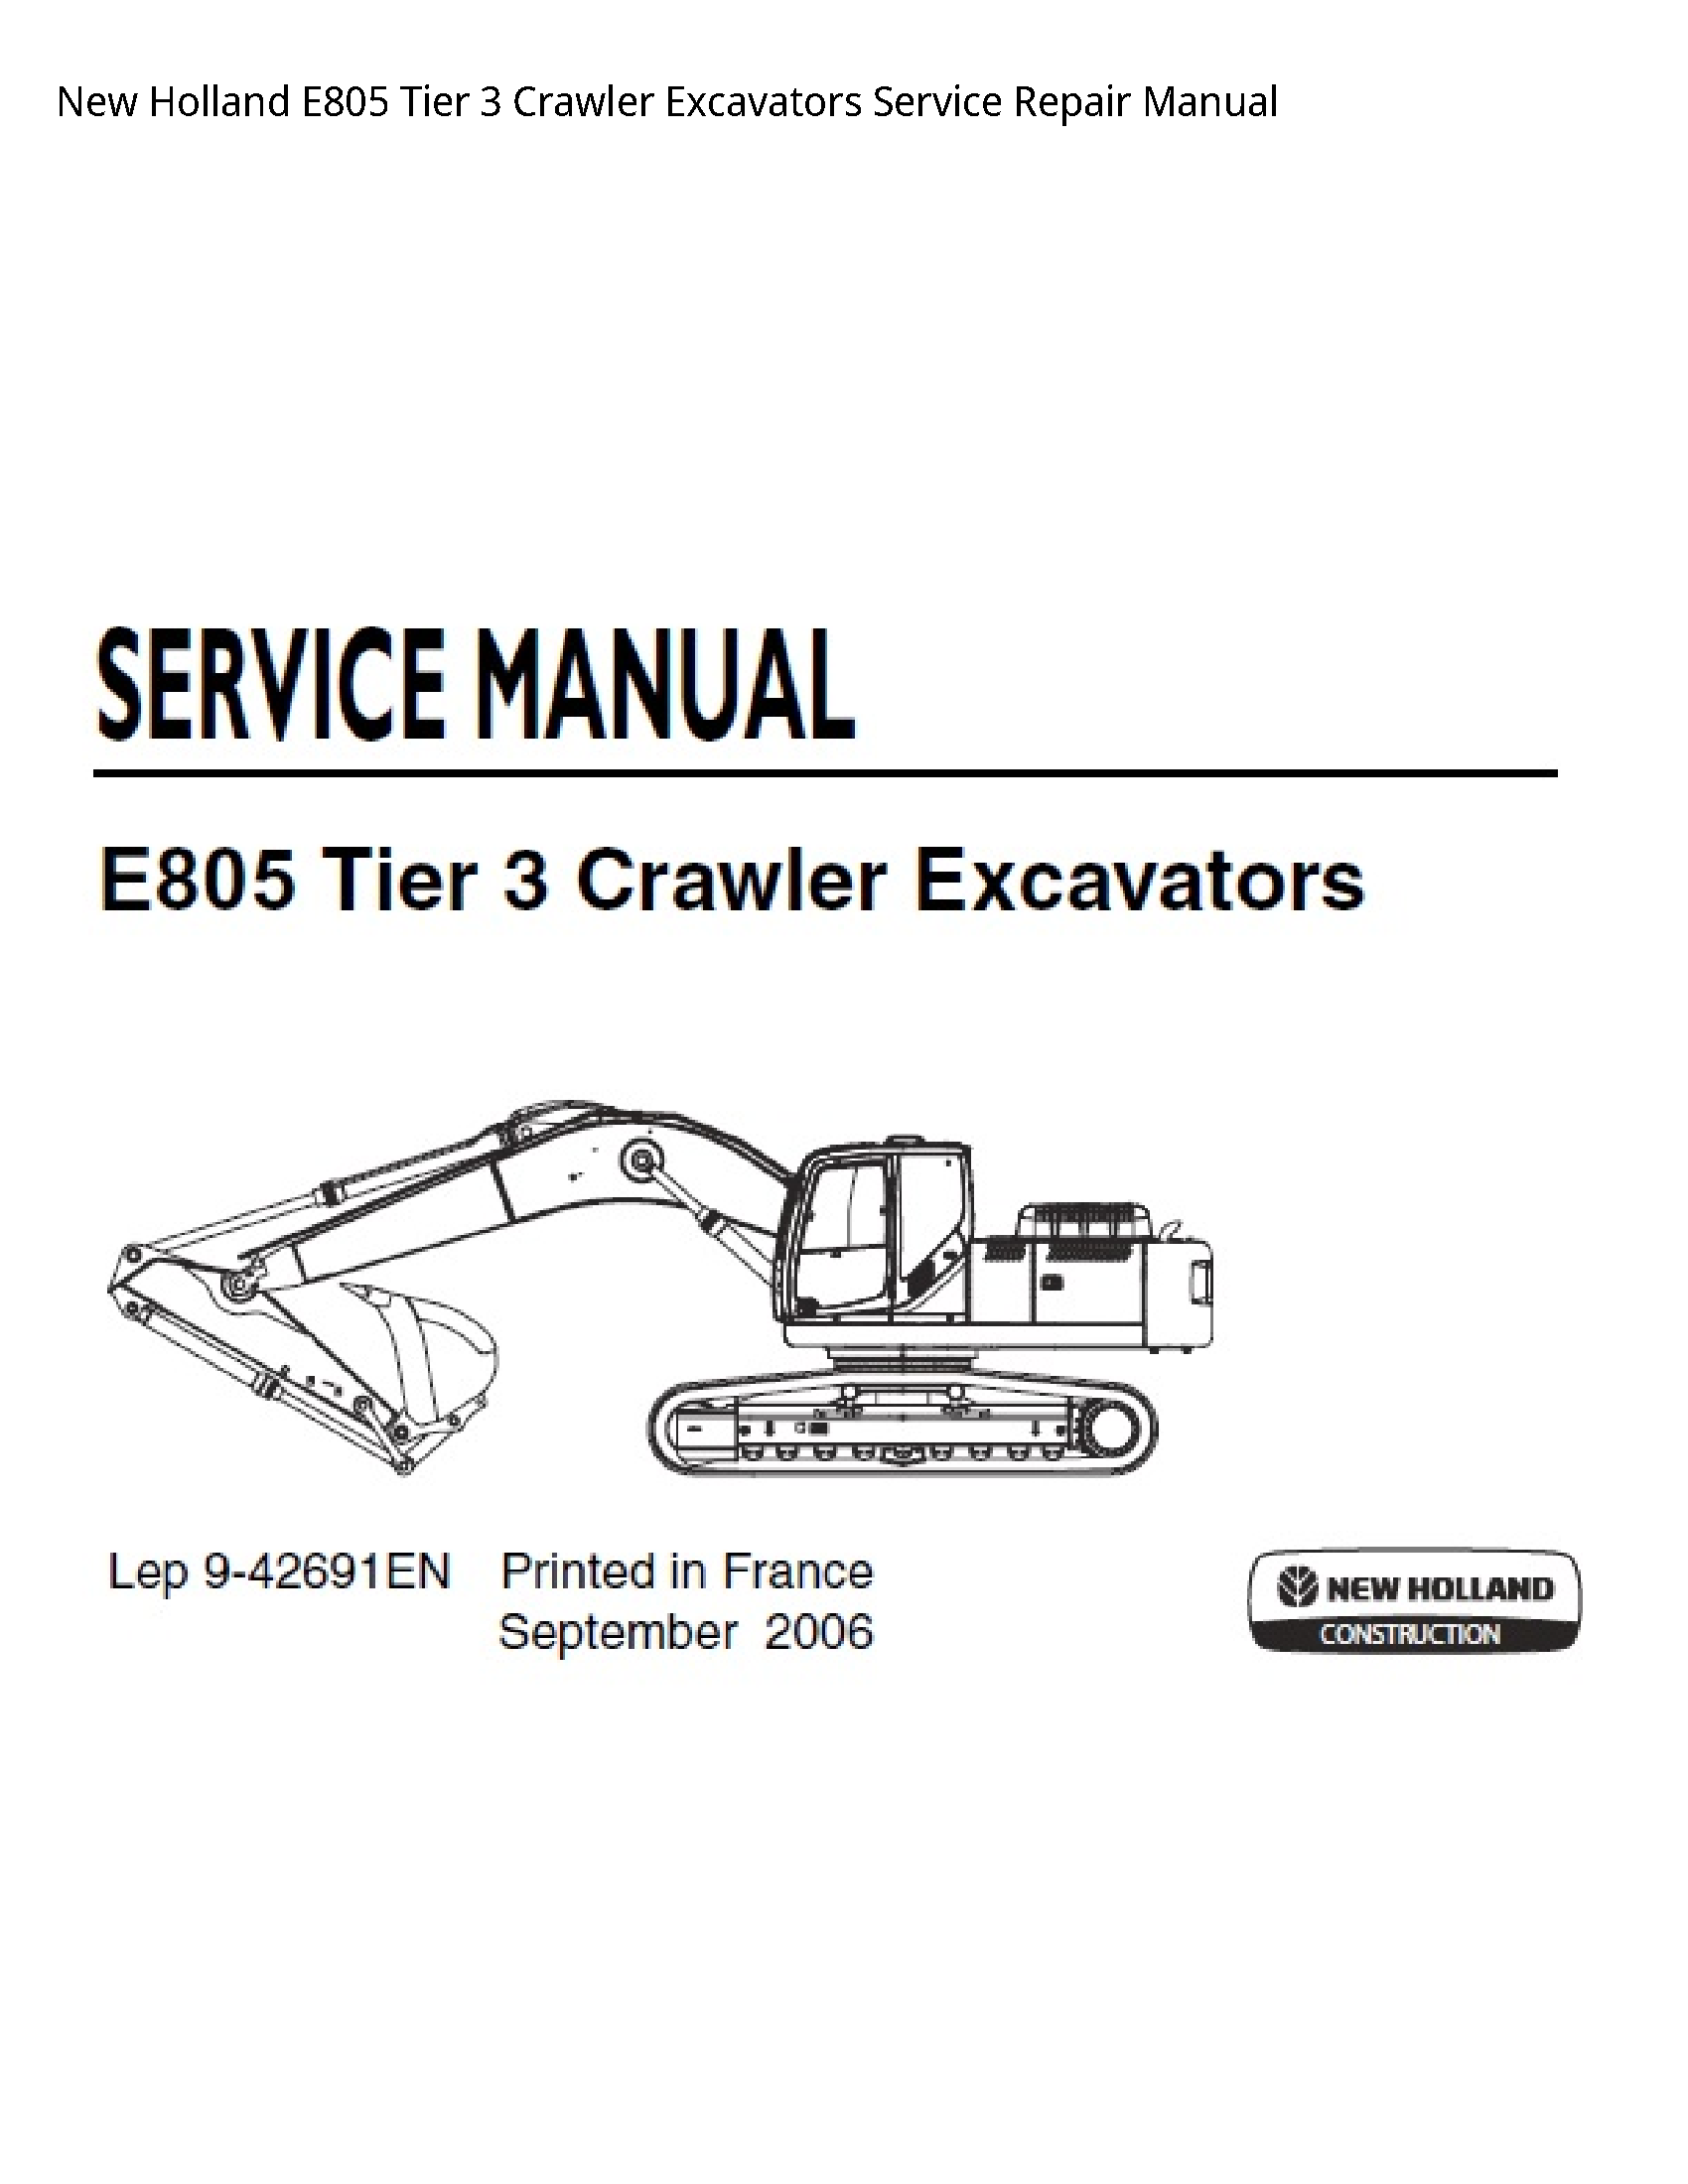 New Holland E805 Tier Crawler Excavators manual